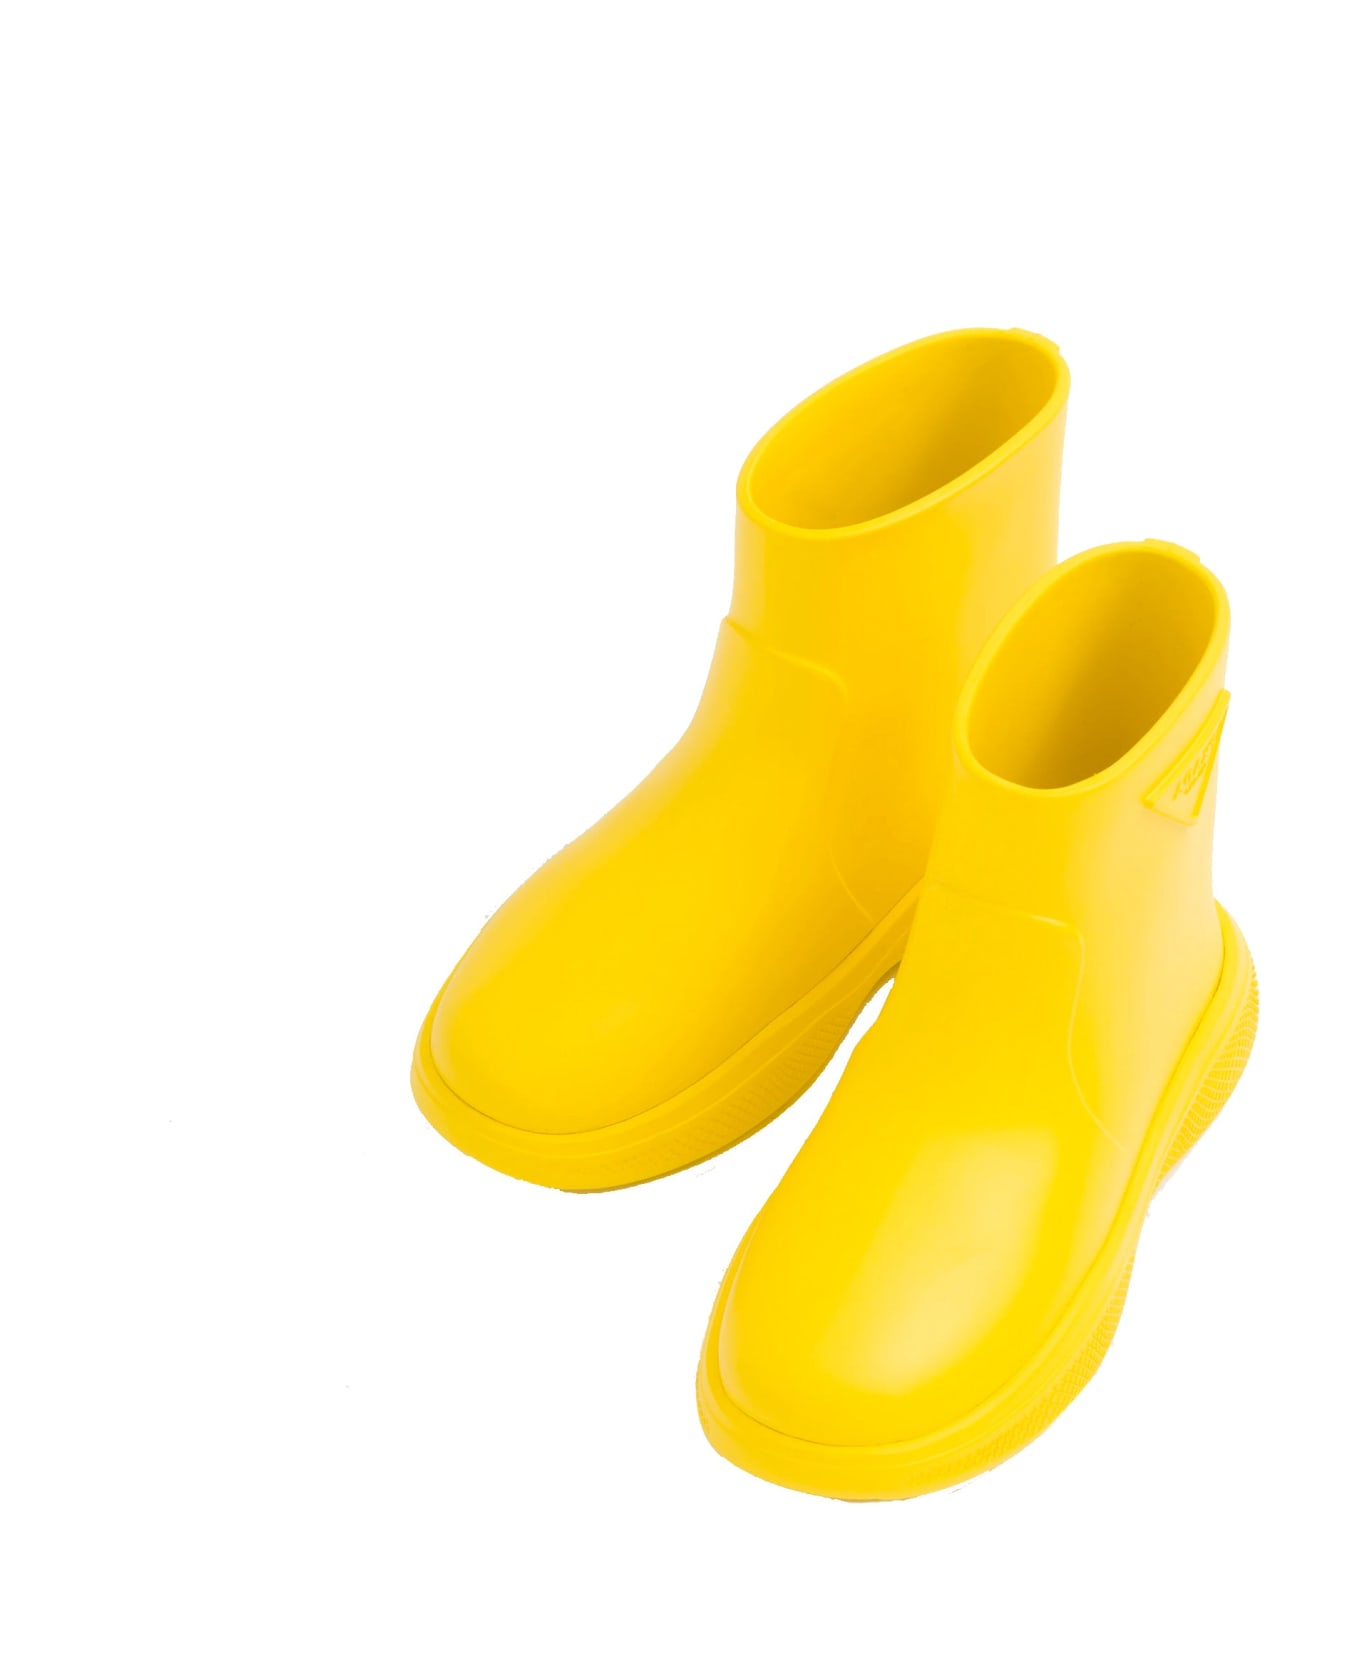 Prada Logo Rubber Boots - Yellow